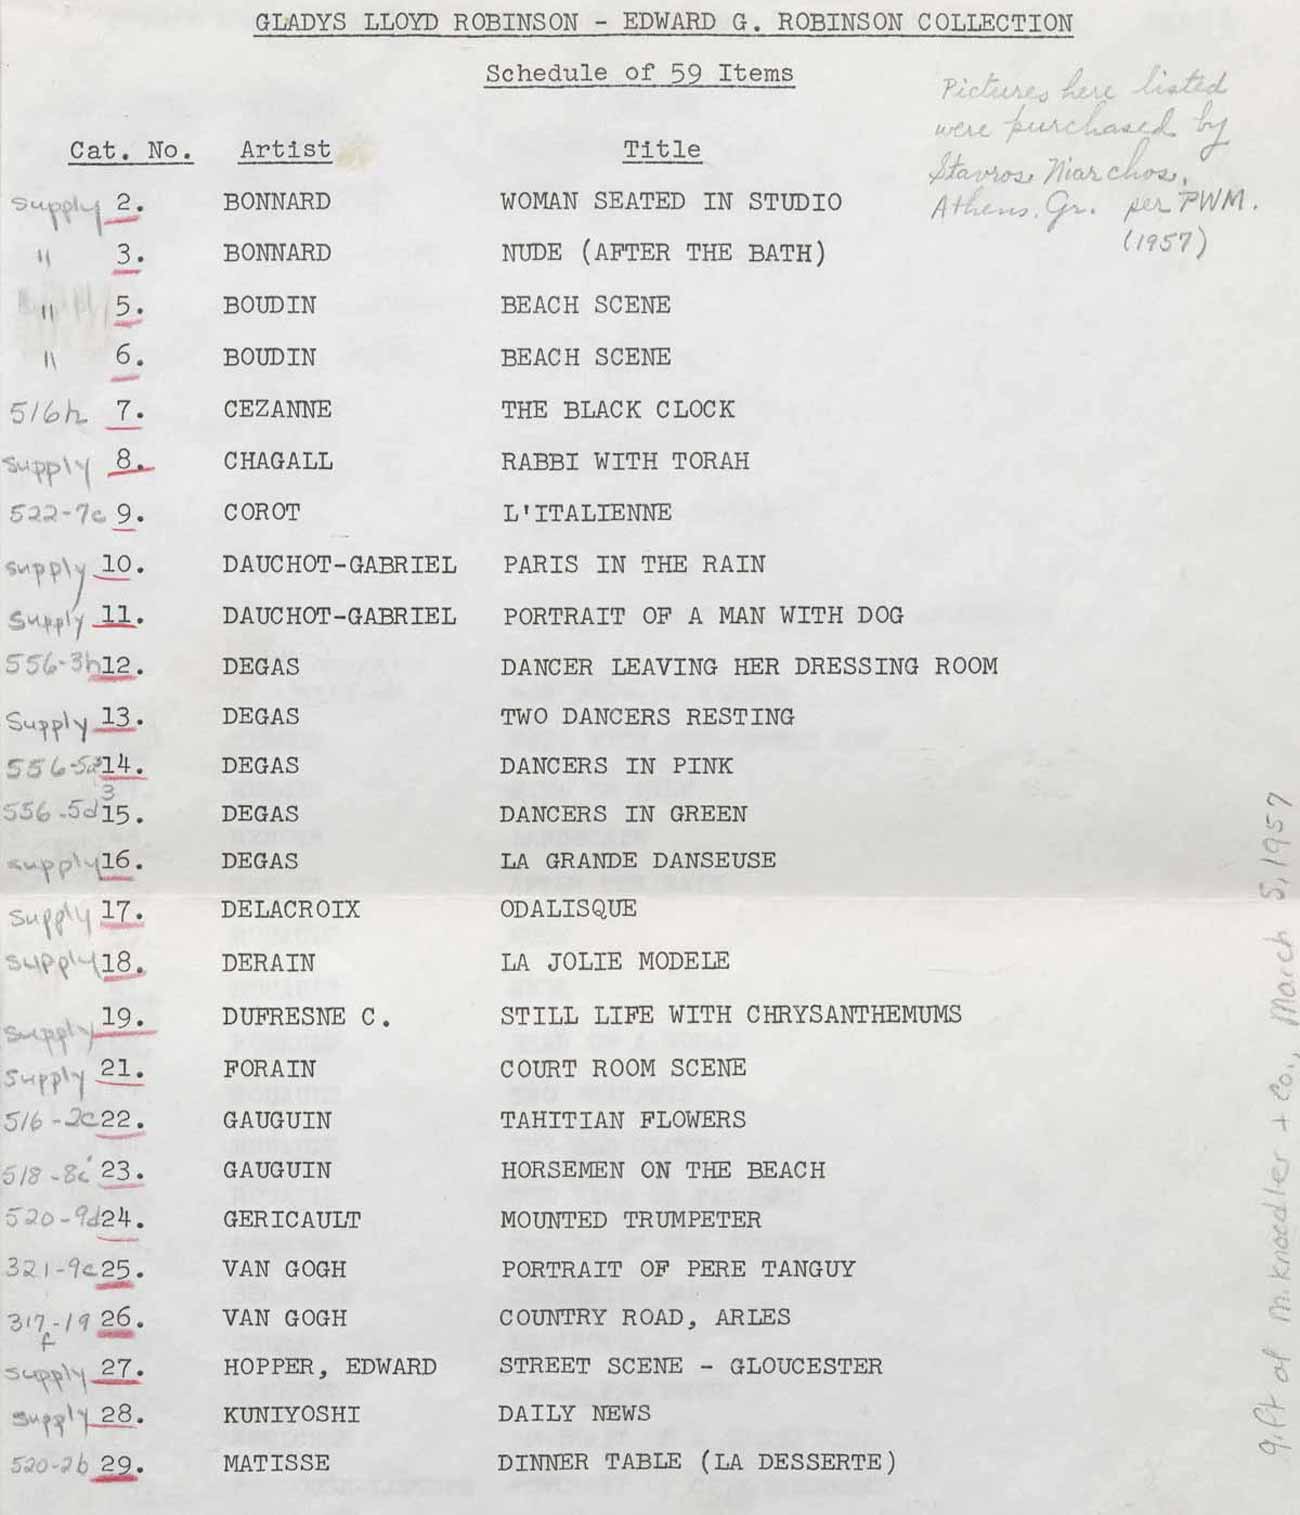 Typewritten list titled "Gladys Lloyd Robinson - Edward G. Robinson Collection, Schedule of 59 Items"